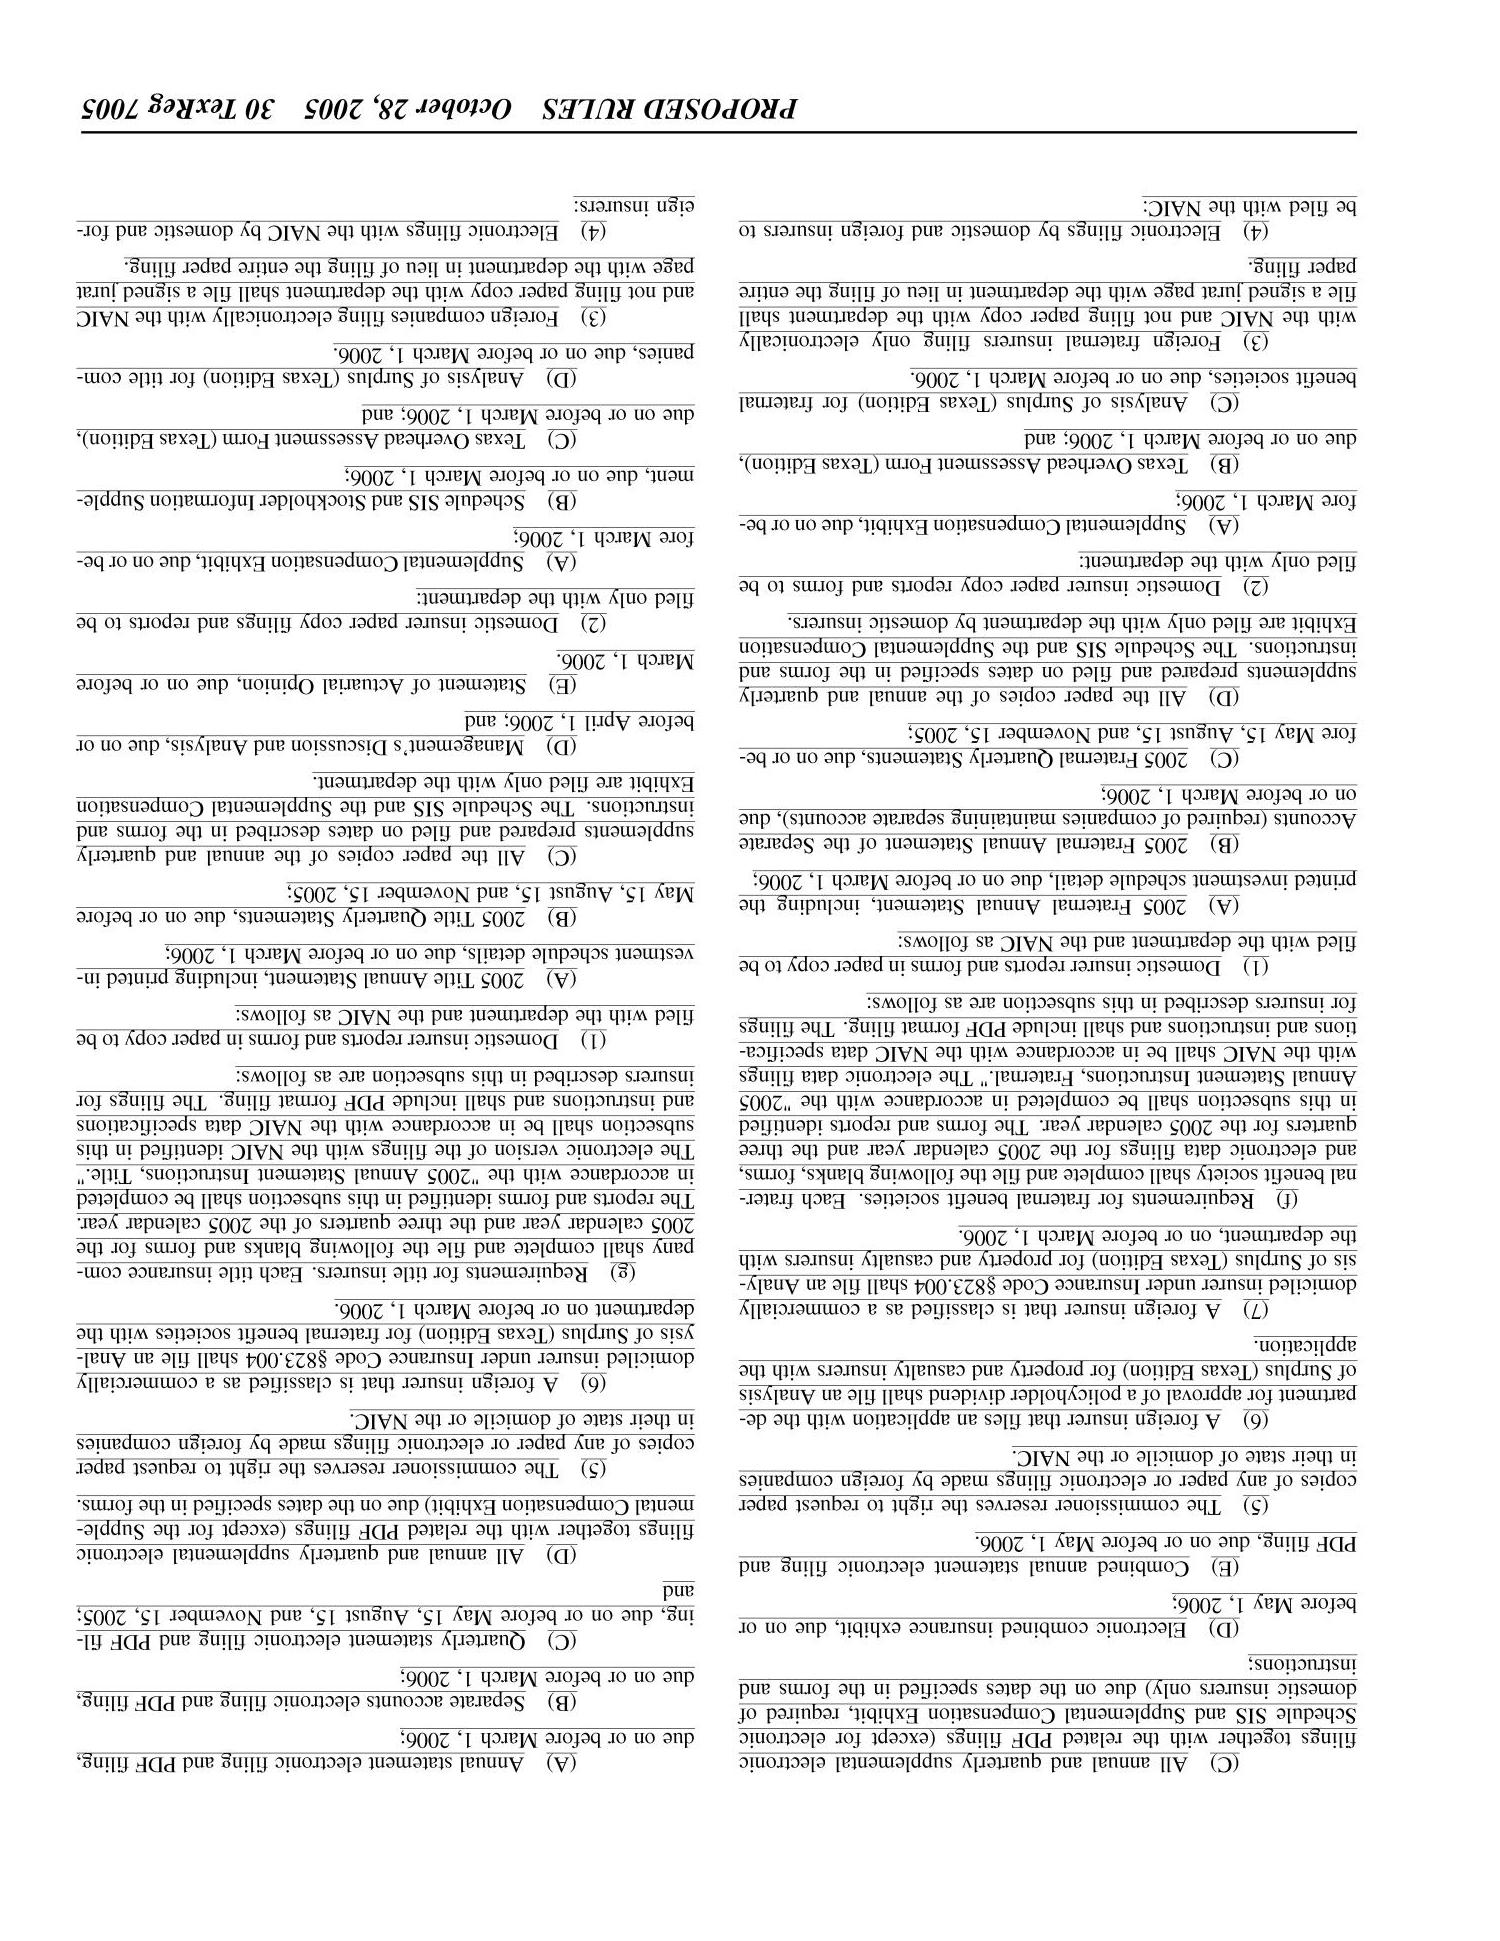 Texas Register, Volume 30, Number 43, Pages 6973-7094, October 28, 2005
                                                
                                                    7005
                                                